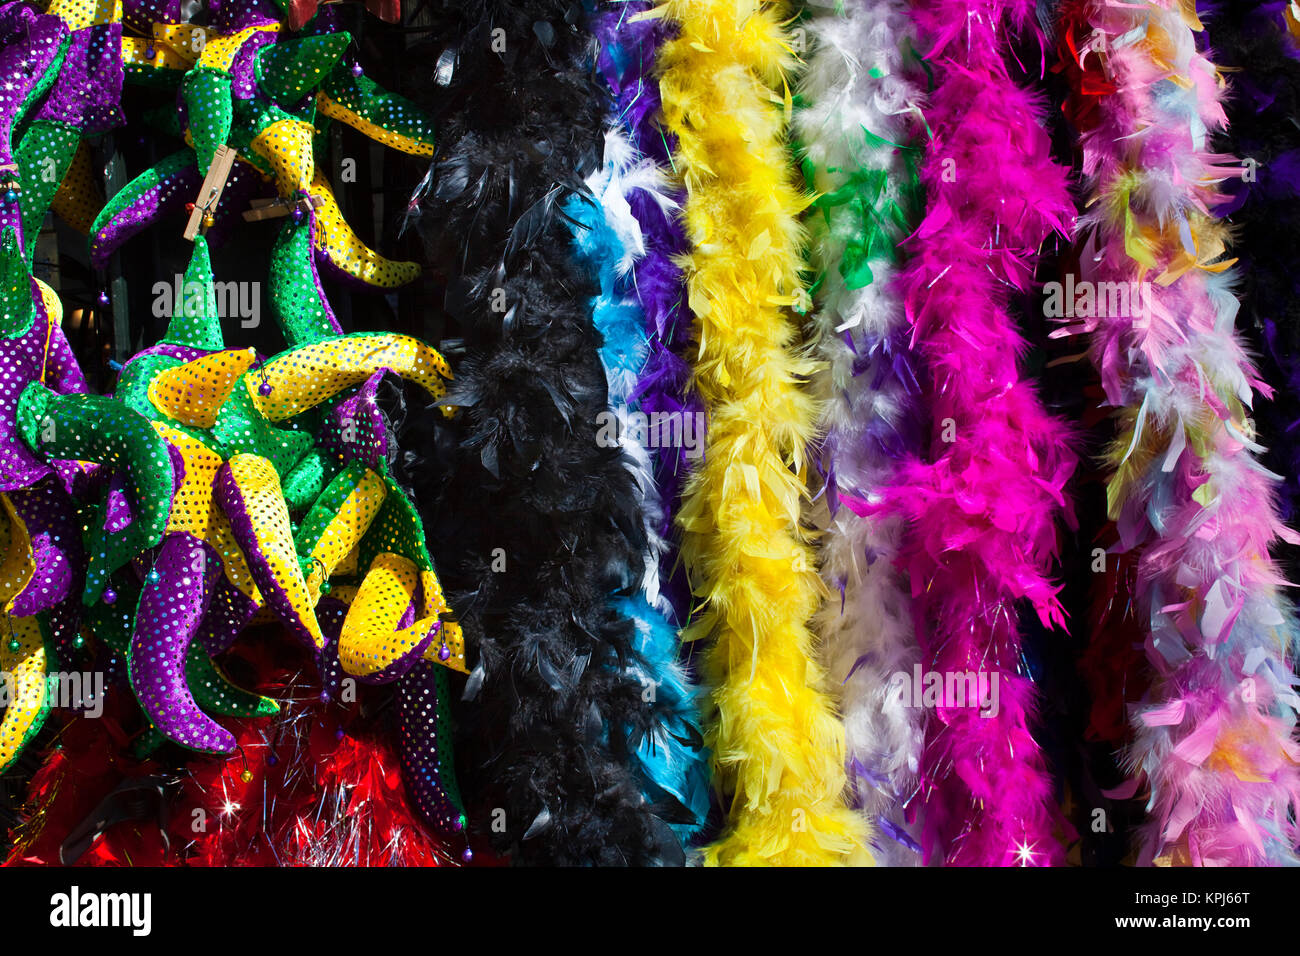 French Quarter Mardi Gras Decorations #1 Zip Pouch by Mountain Dreams -  Pixels